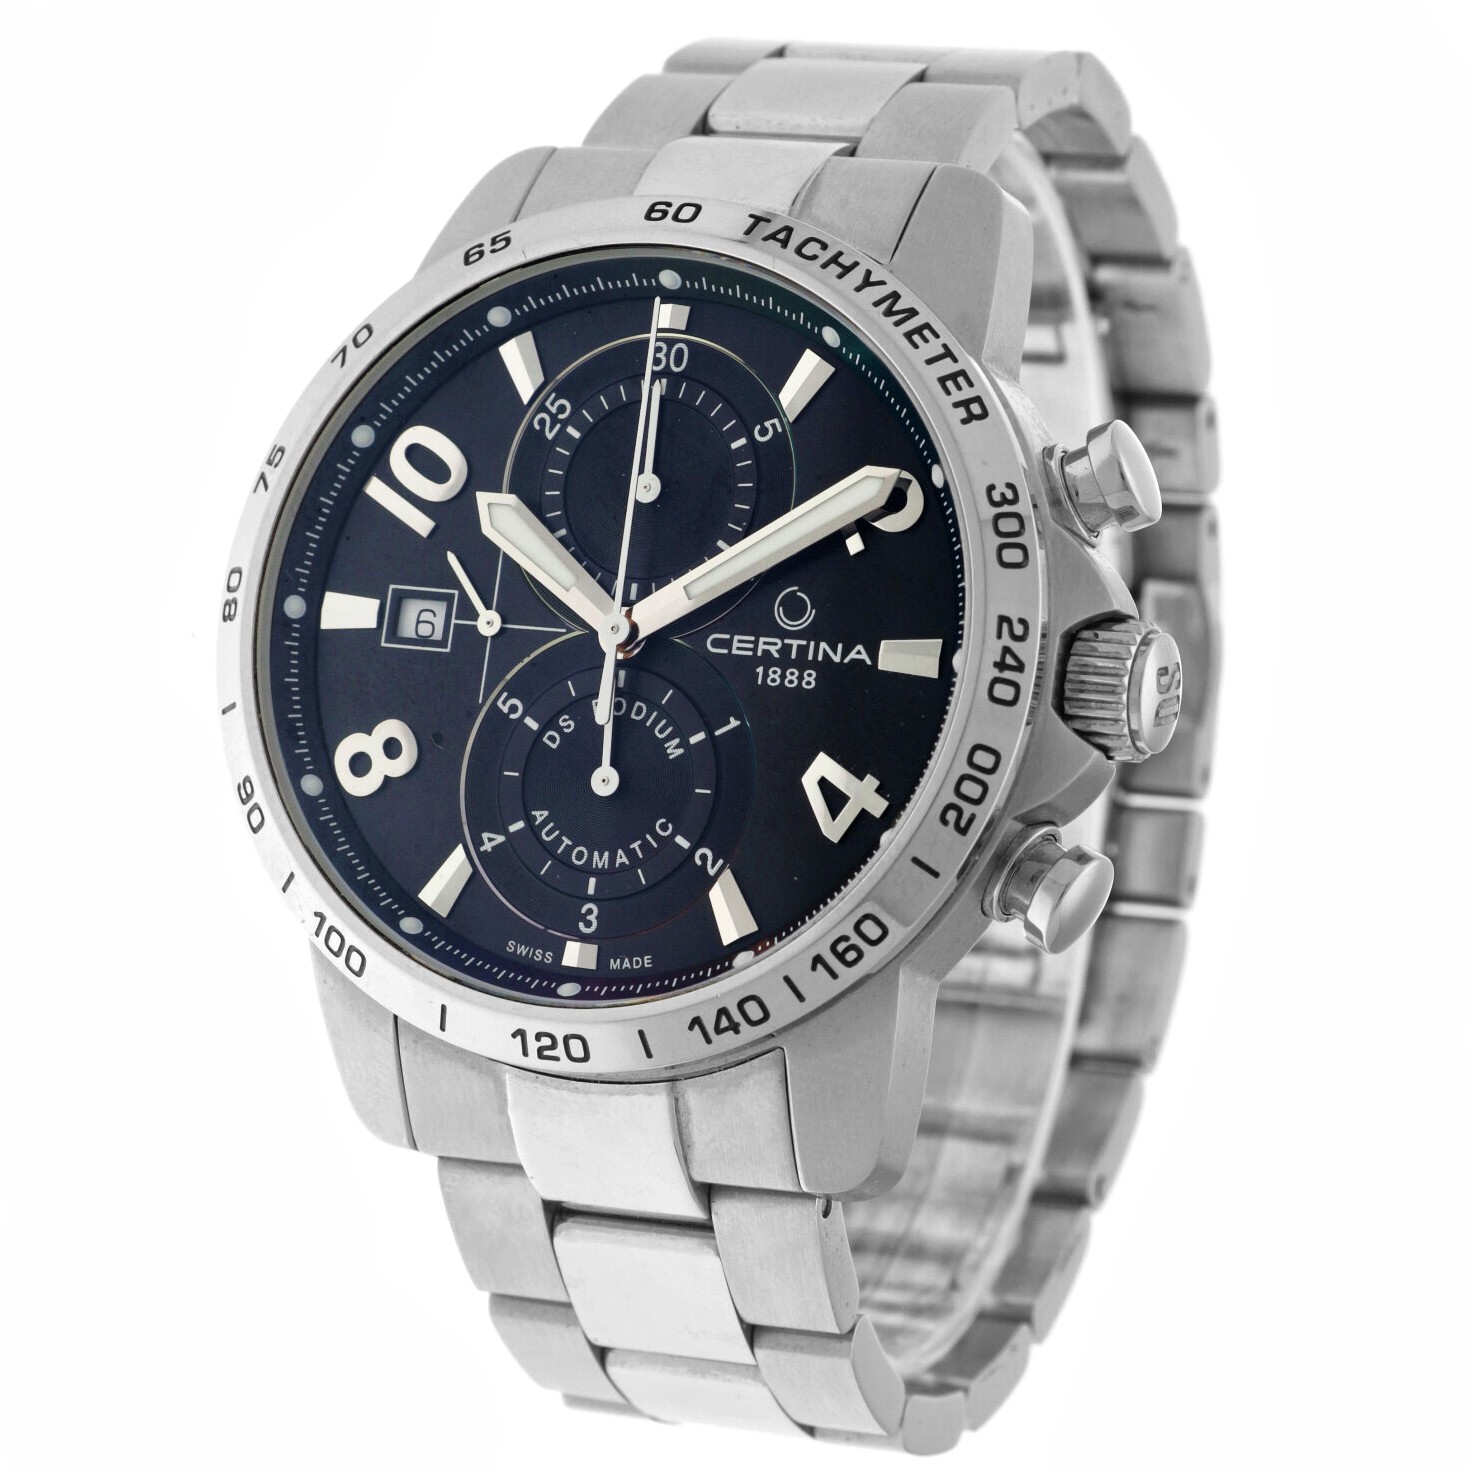 No Reserve - Certina DS Podium Chronograph C034.427.11.057.00 - Men's watch. - Image 2 of 6